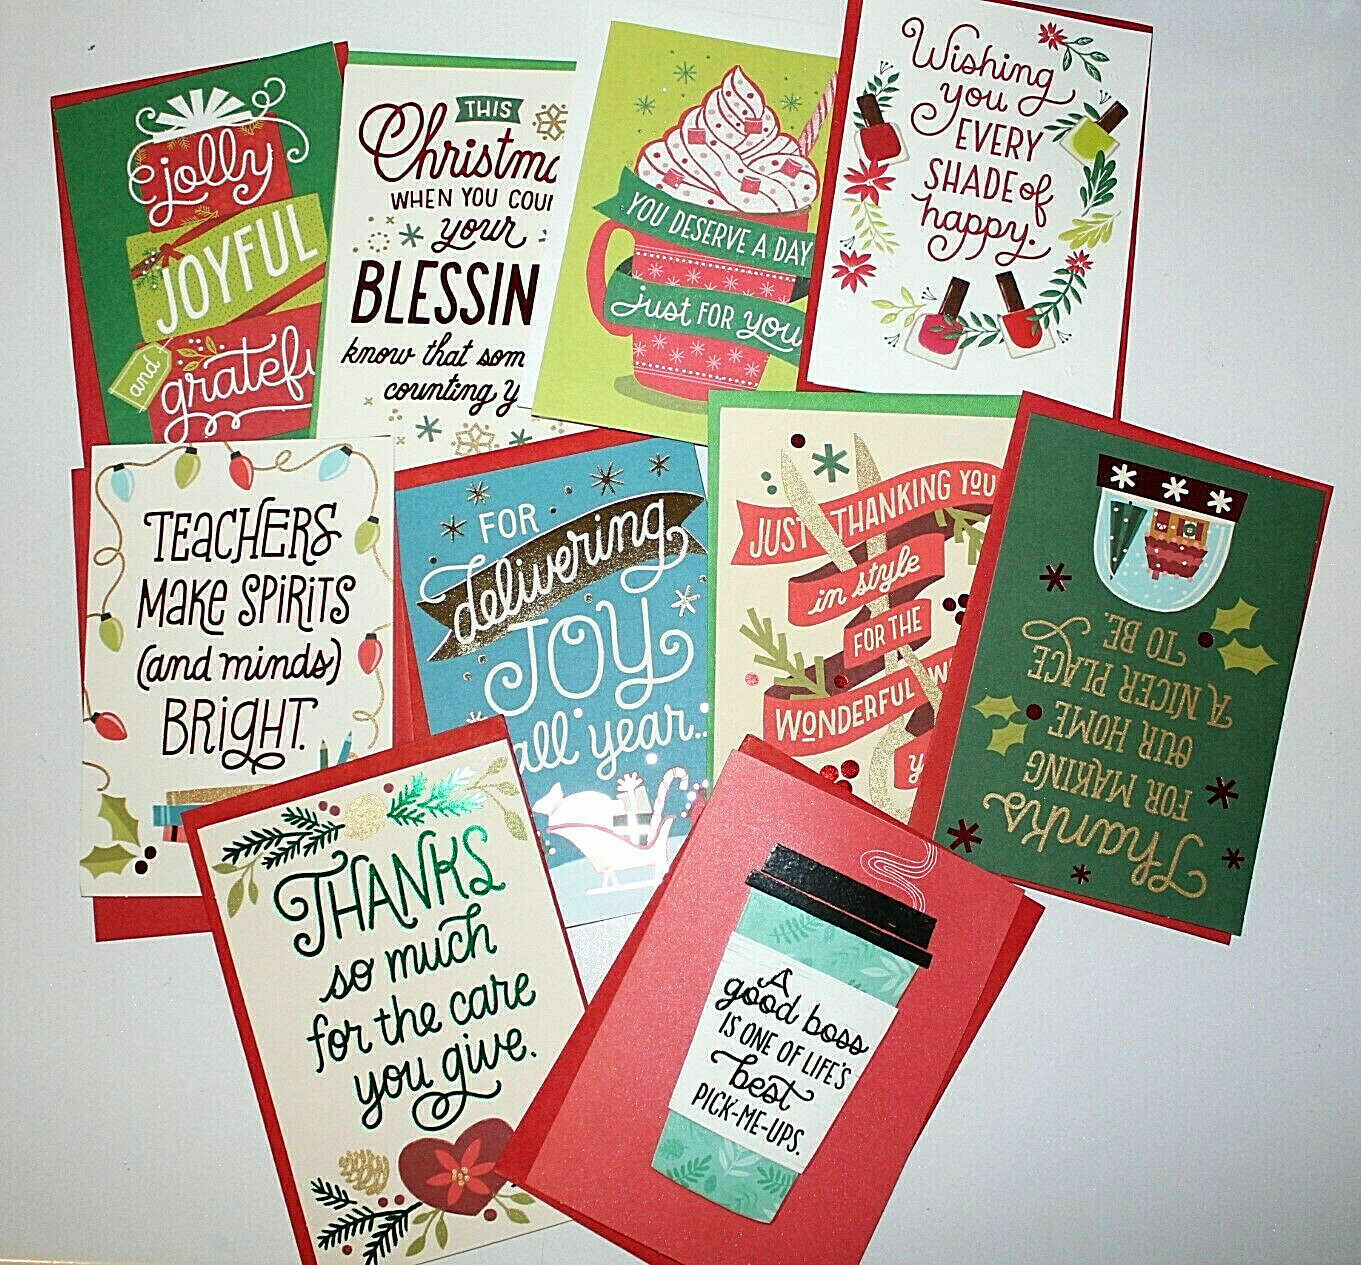 (100) New Hallmark Christmas Greeting Cards Assorted Holiday & Envelopes Mailing Hallmark Does Not Apply - фотография #3